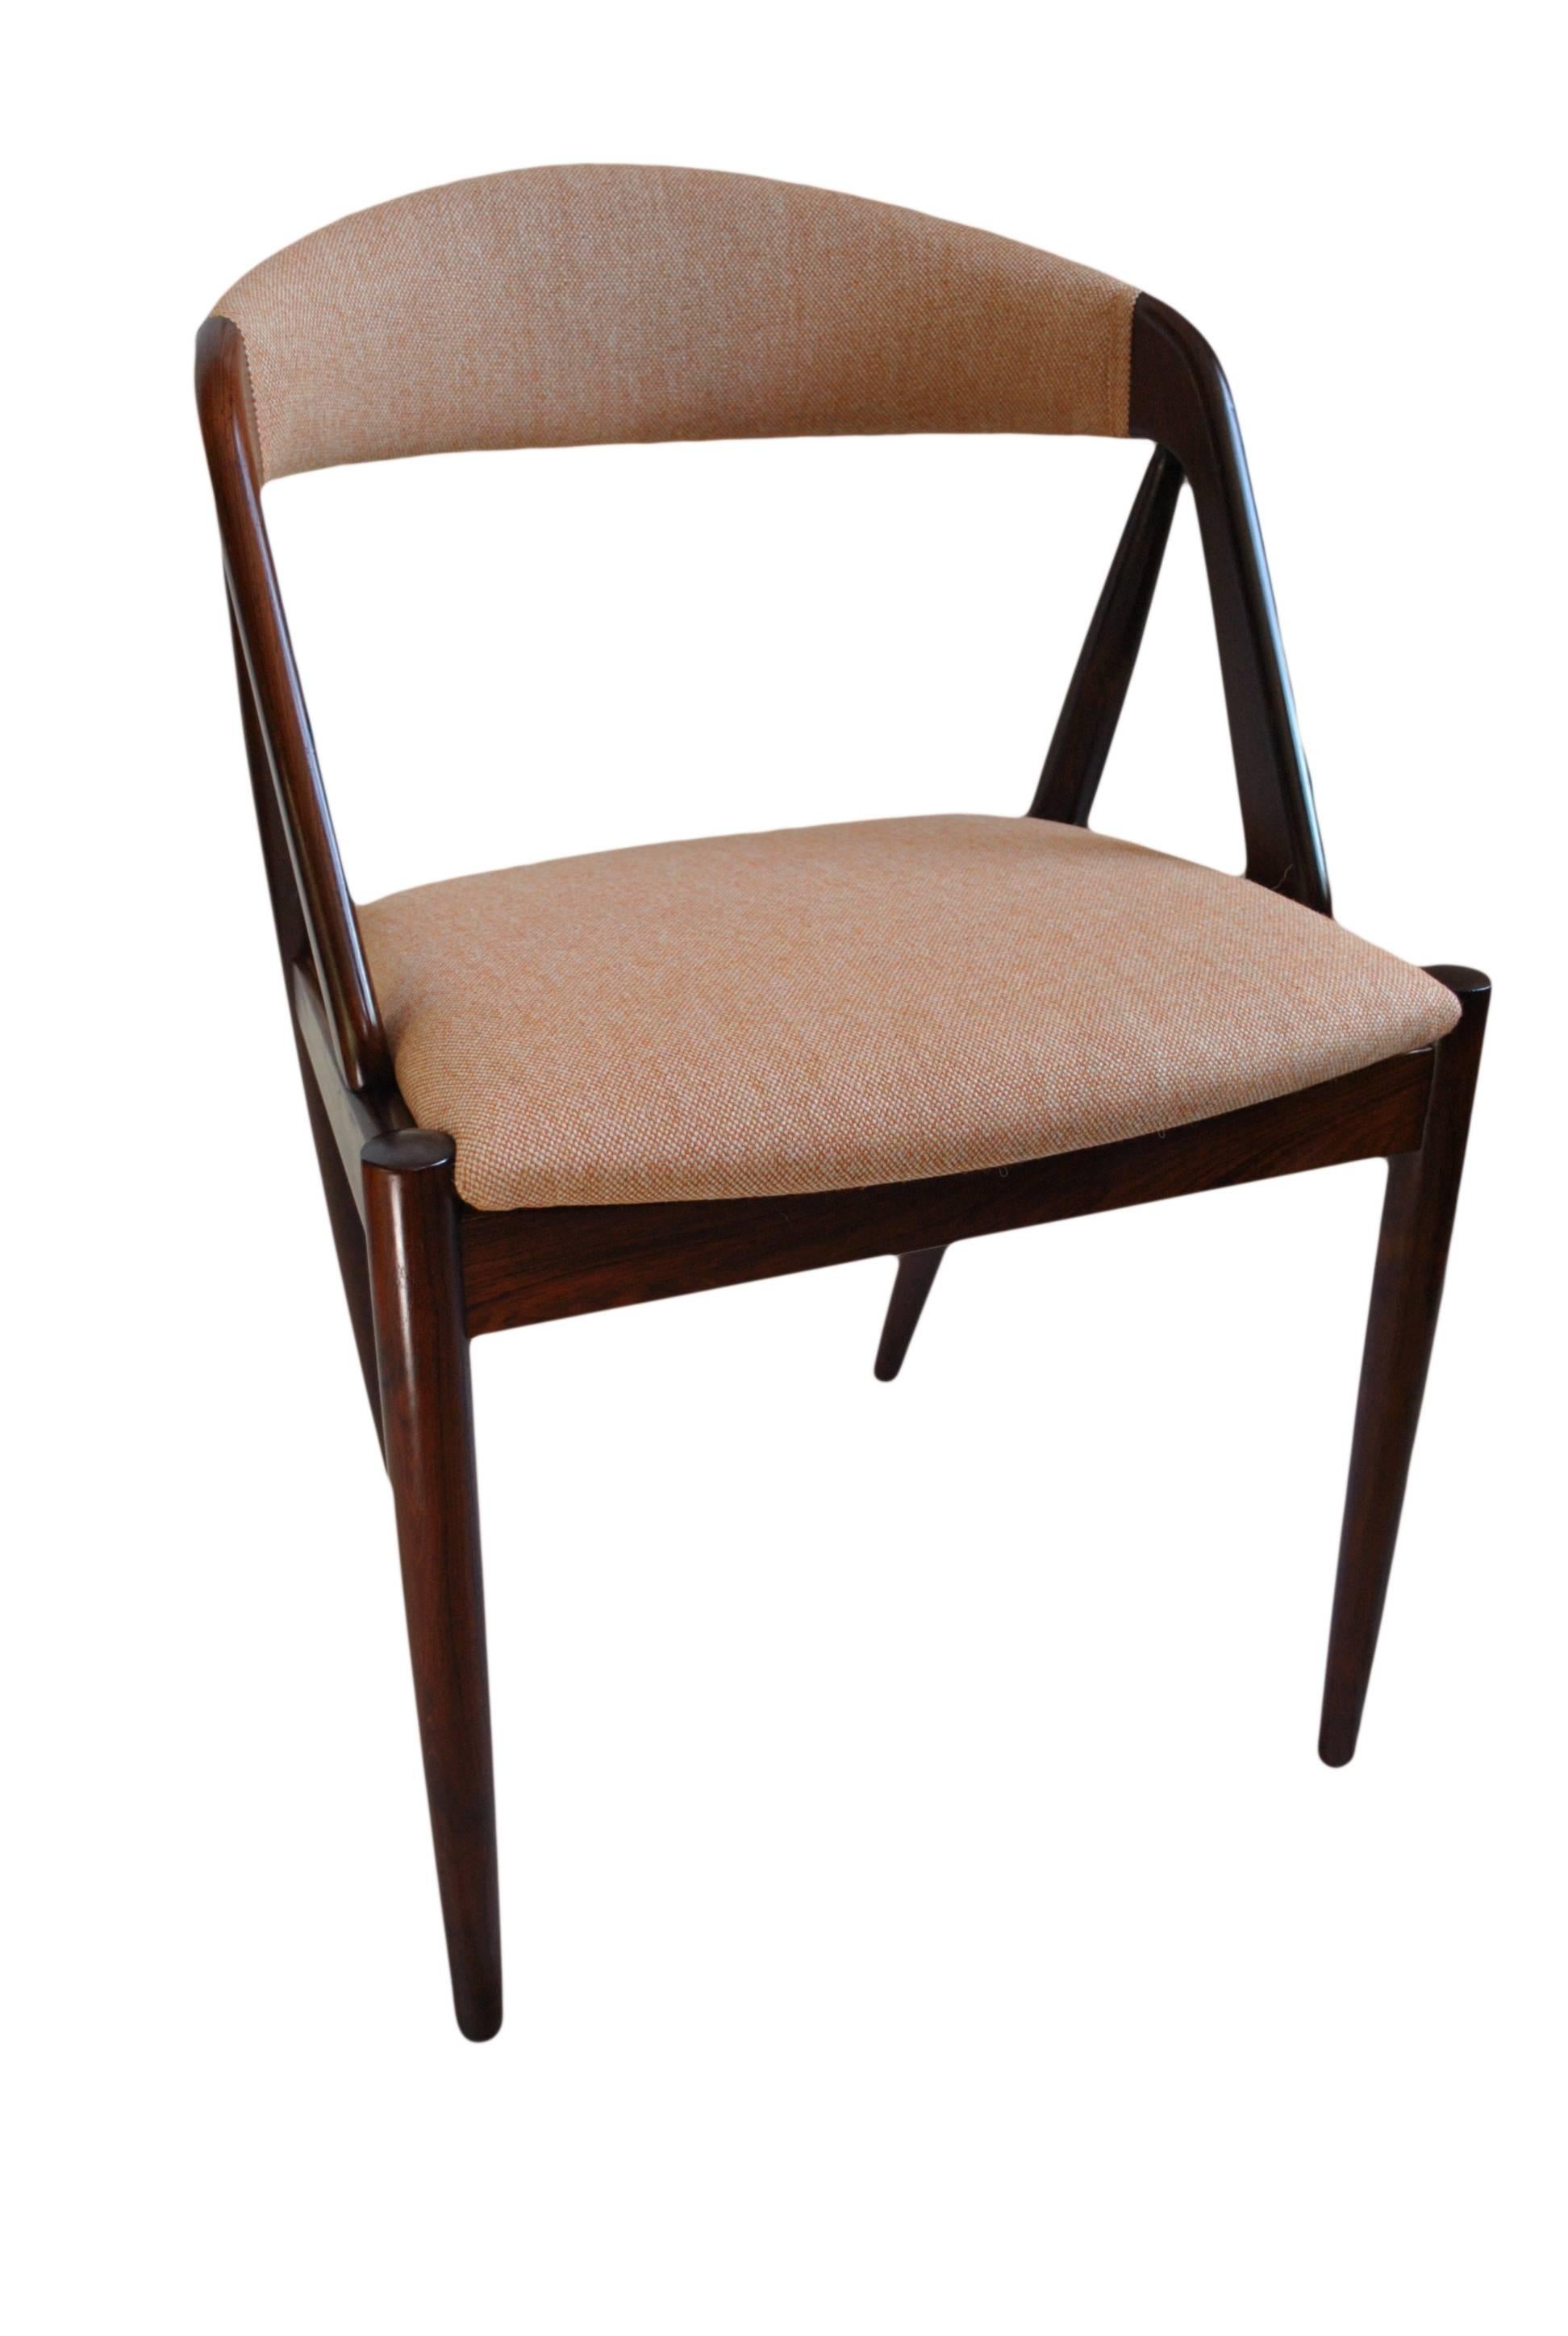 Hardwood Kai Kristiansen Dining Chairs, Refurbished and reupholstered.